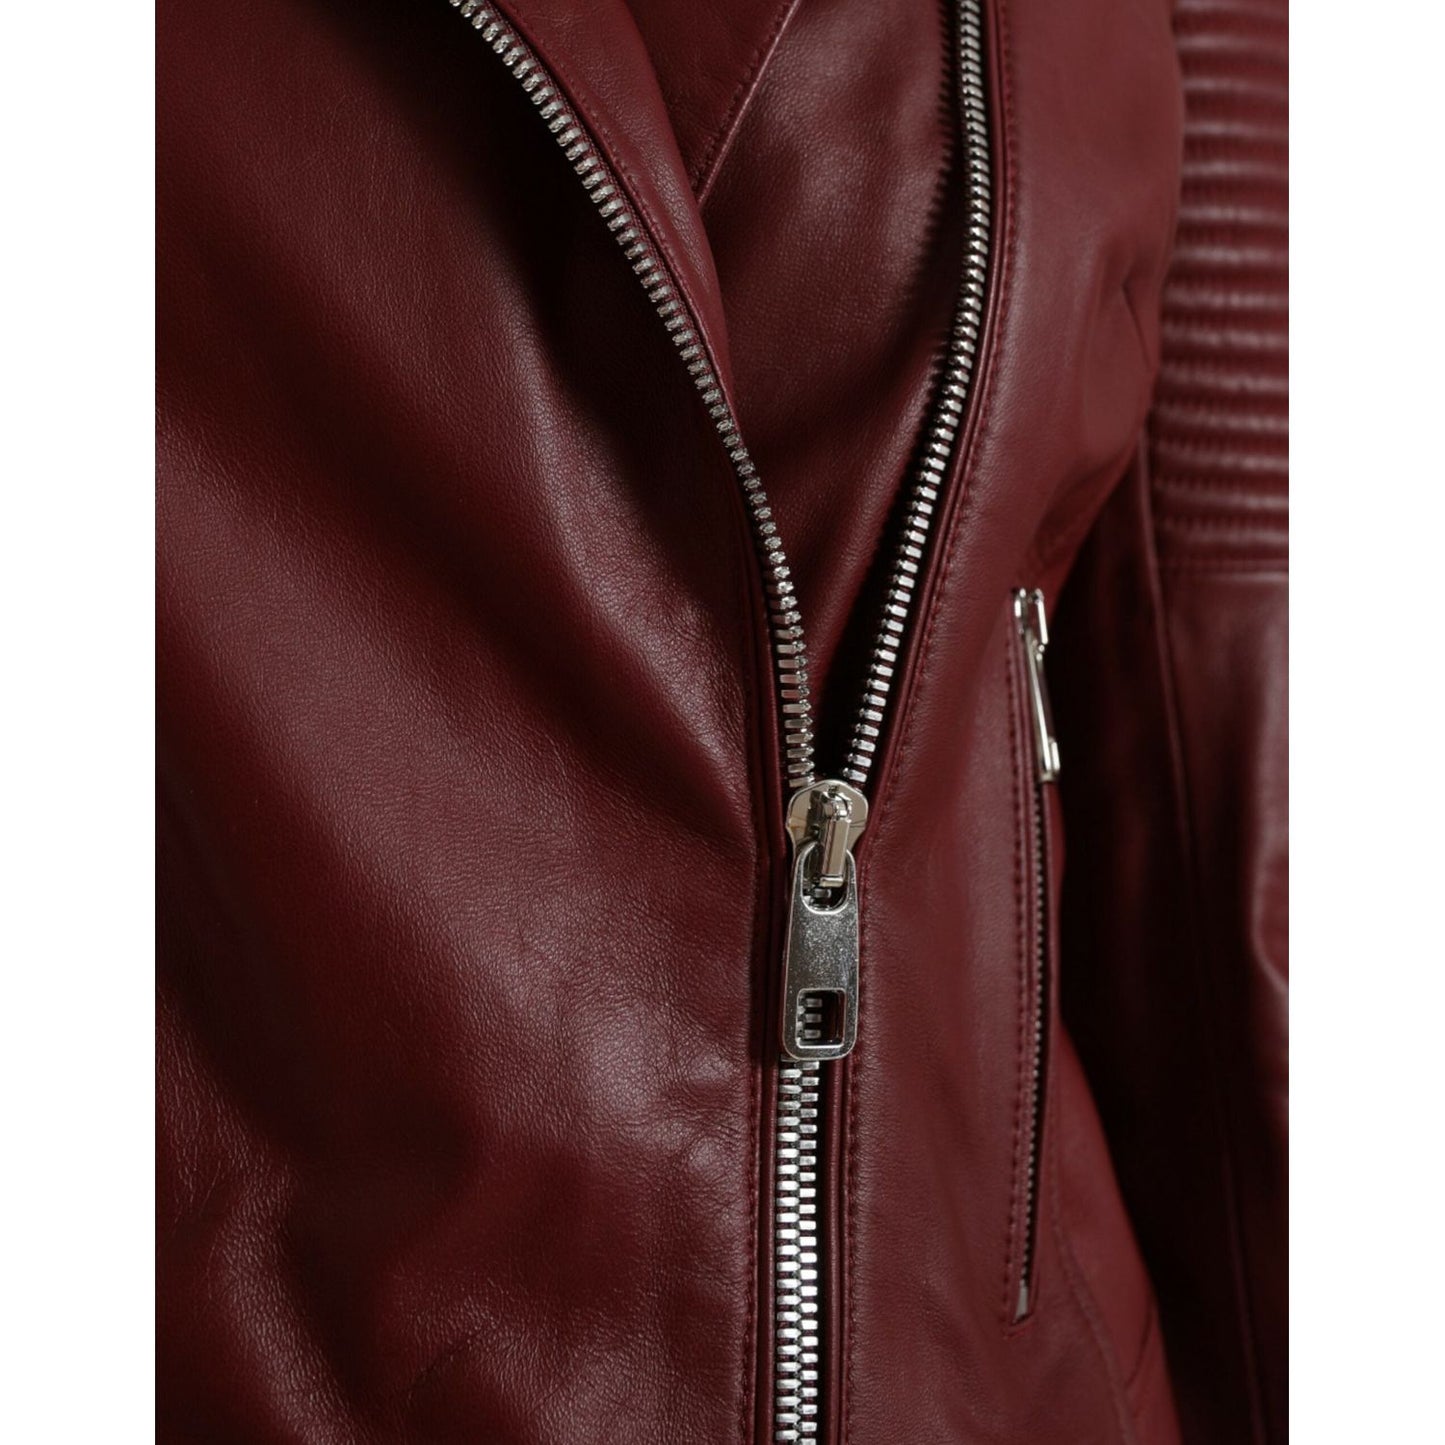 Dolce & Gabbana Bordeaux Biker Leather Jacket bordeaux-leather-biker-coat-lambskin-jacket 465A9338-BG-1-scaled-c4e8fa41-ed0.jpg